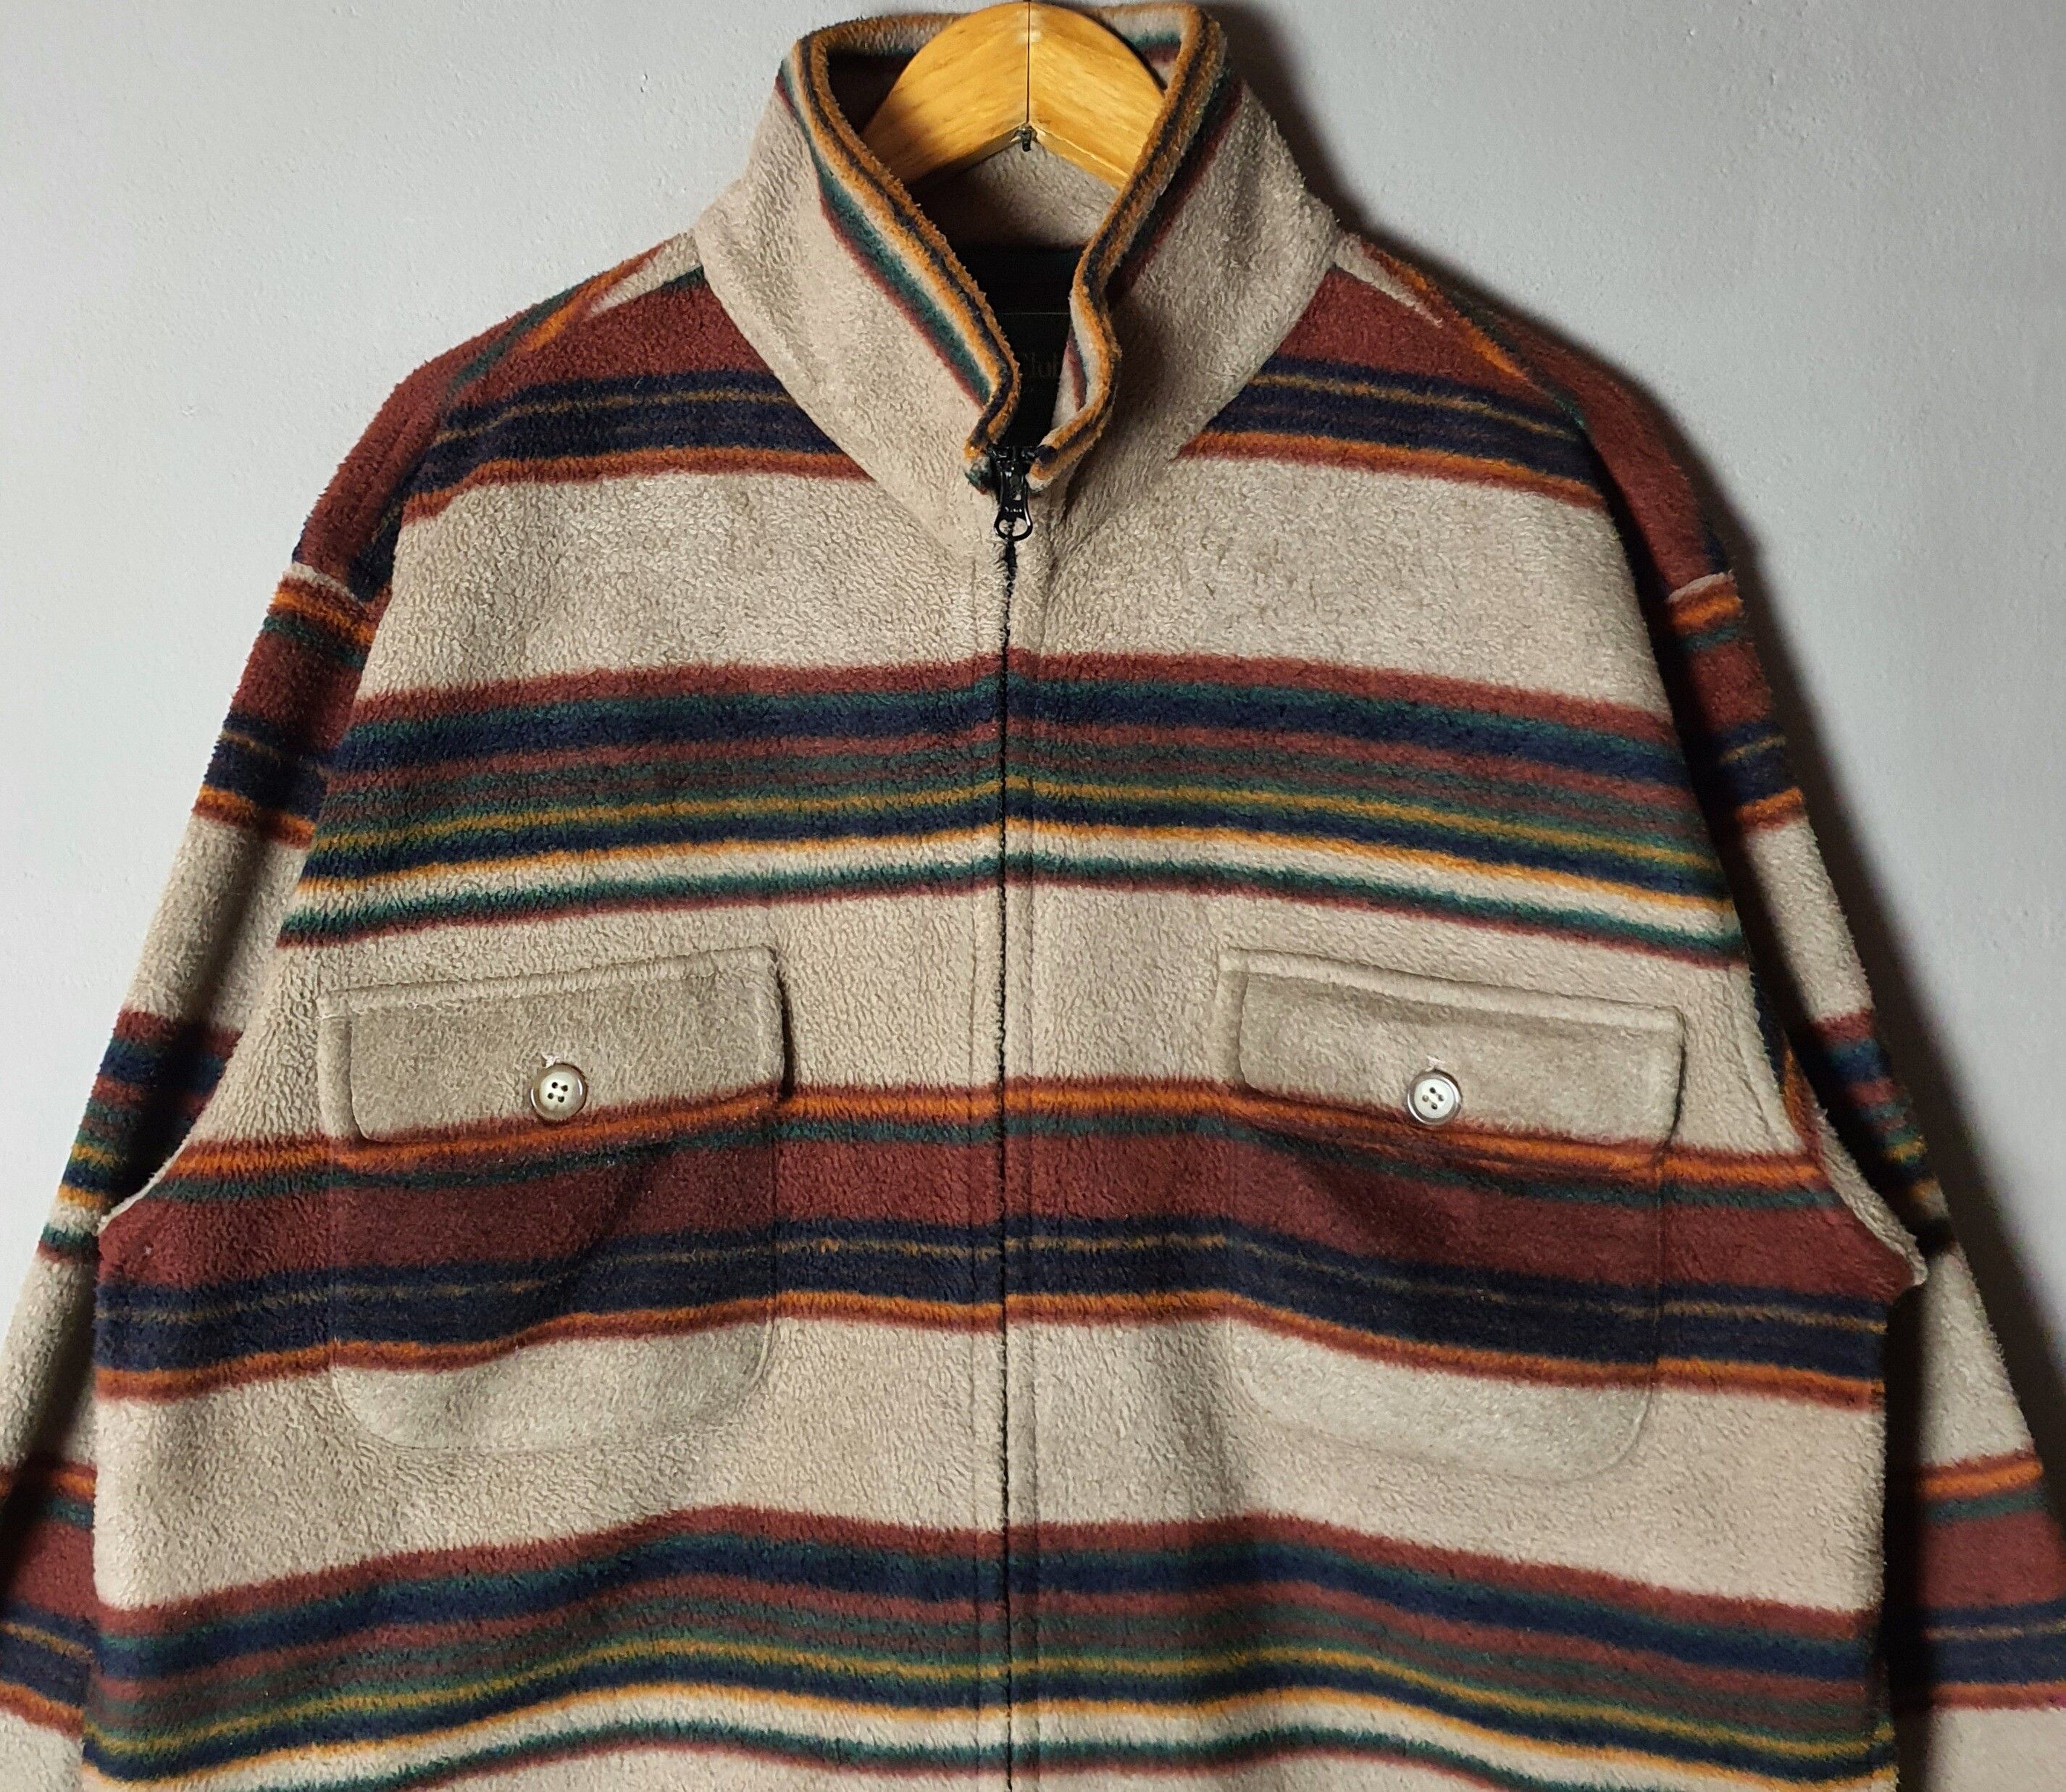 Vintage 90s Polo Club Fleece Zipper Striped Sweater Size Medium Size US M / EU 48-50 / 2 - 6 Preview